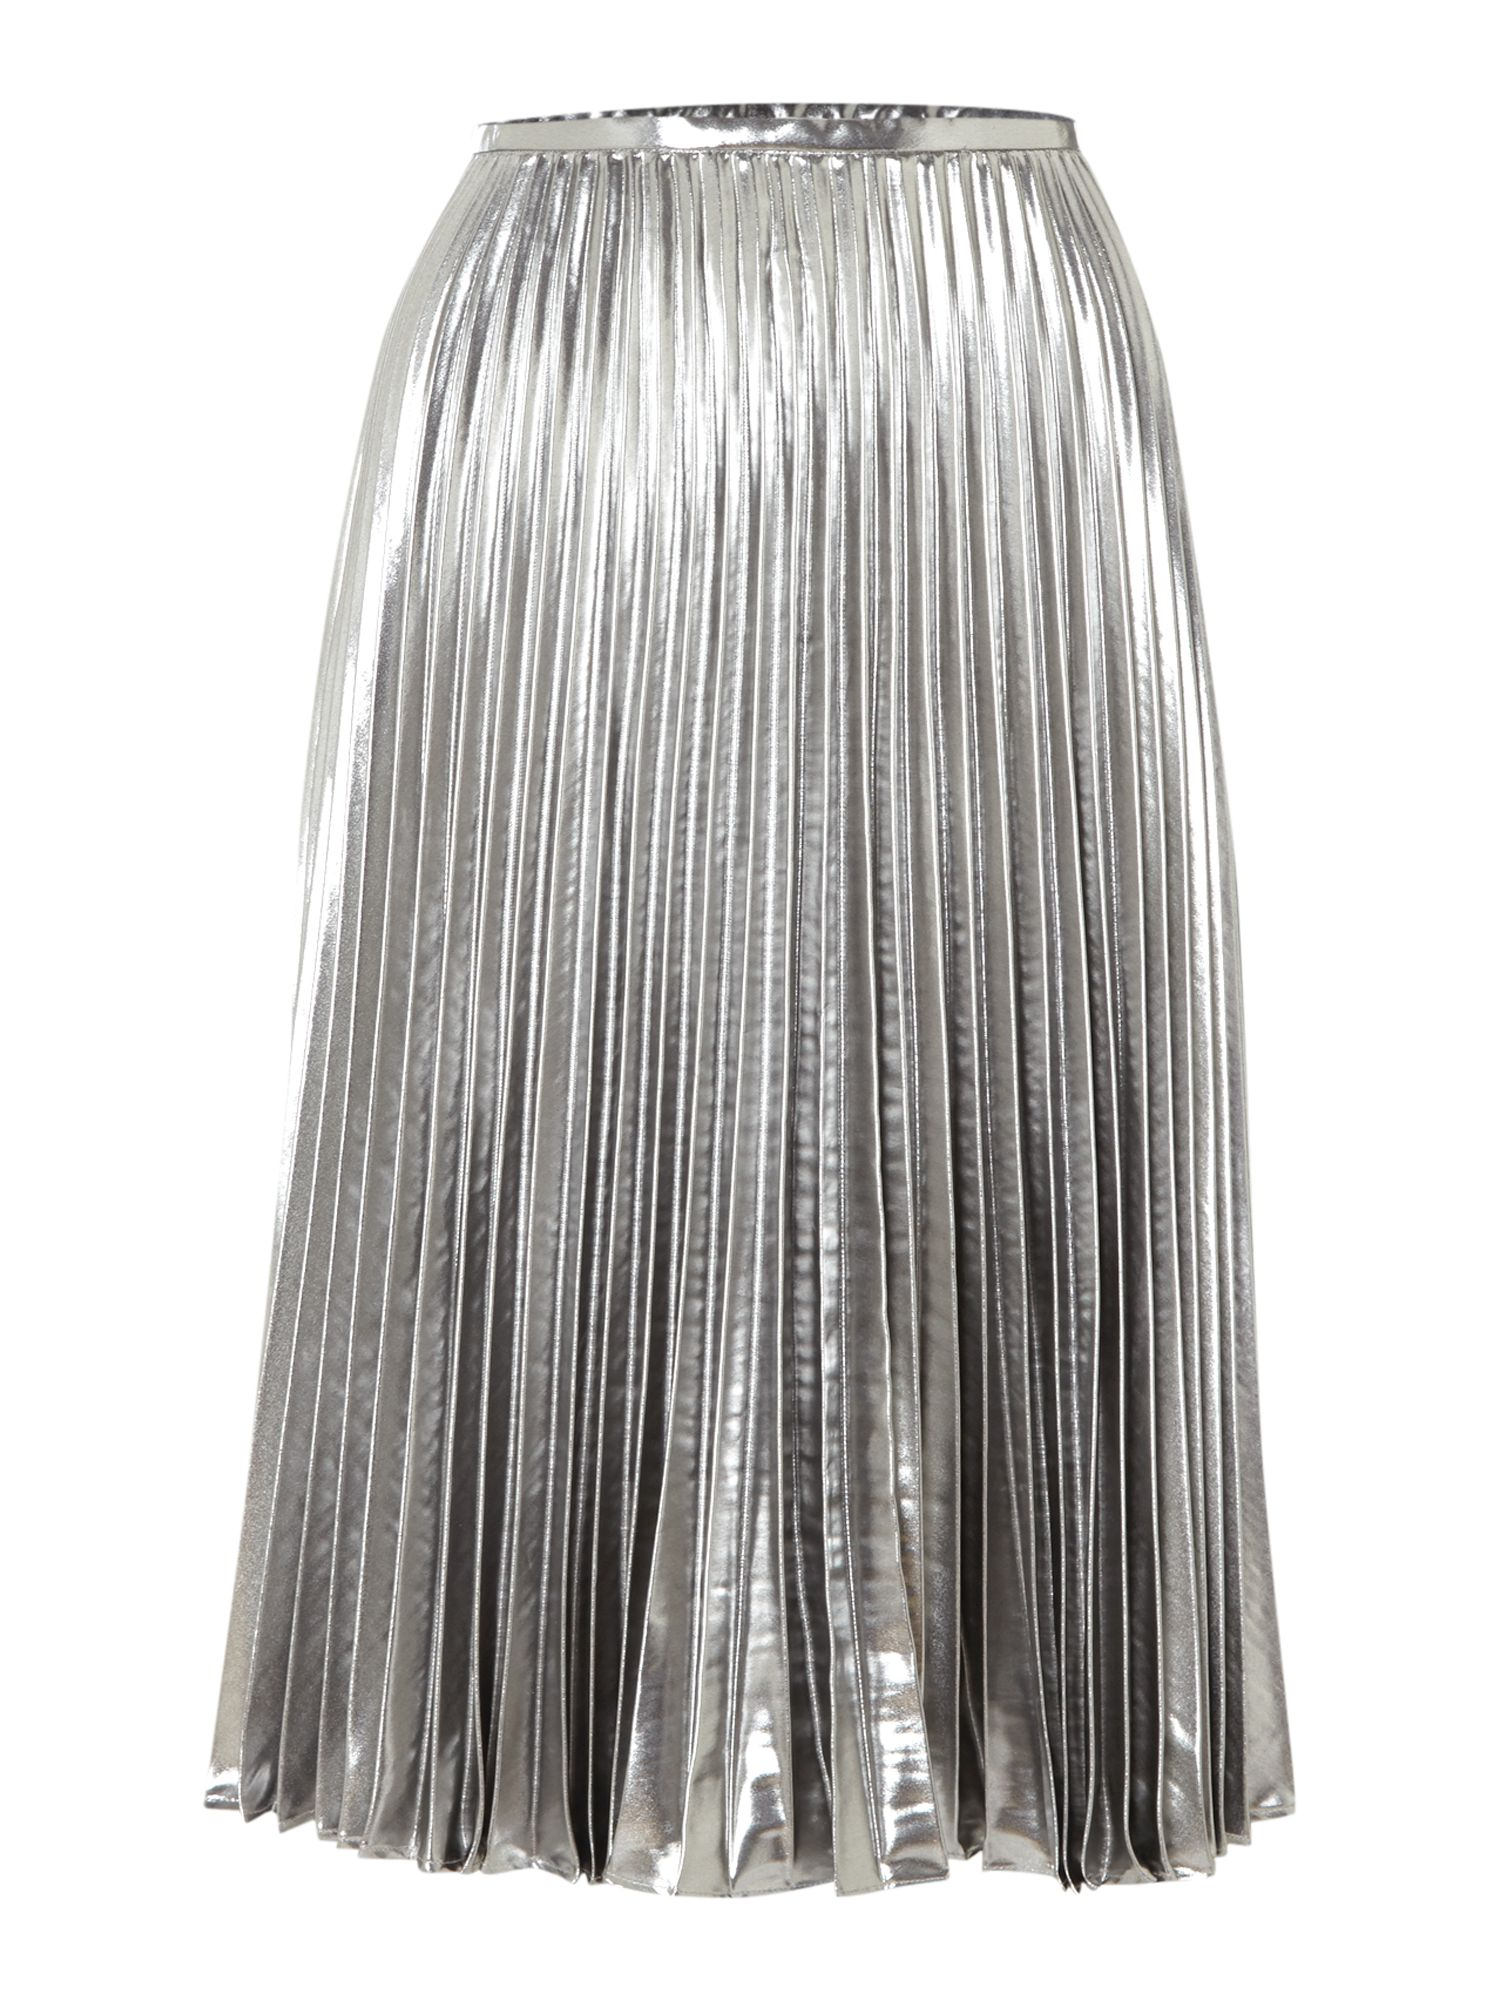 Michael kors Metallic Foil Pleated Skirt in Silver | Lyst